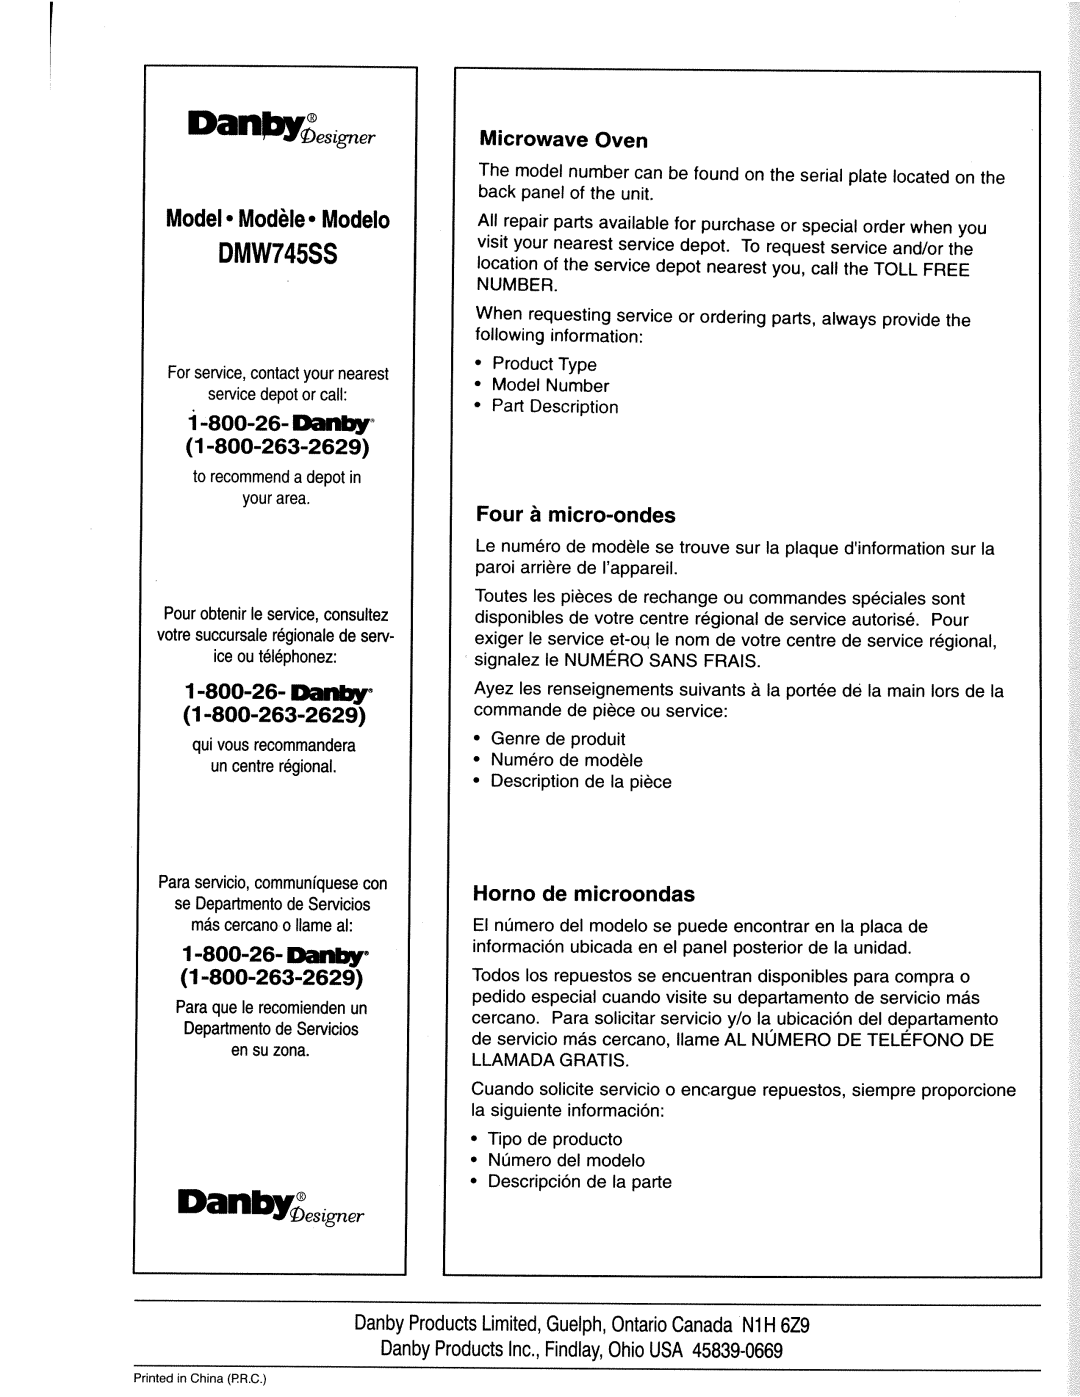 Danby DMW745SS manual 